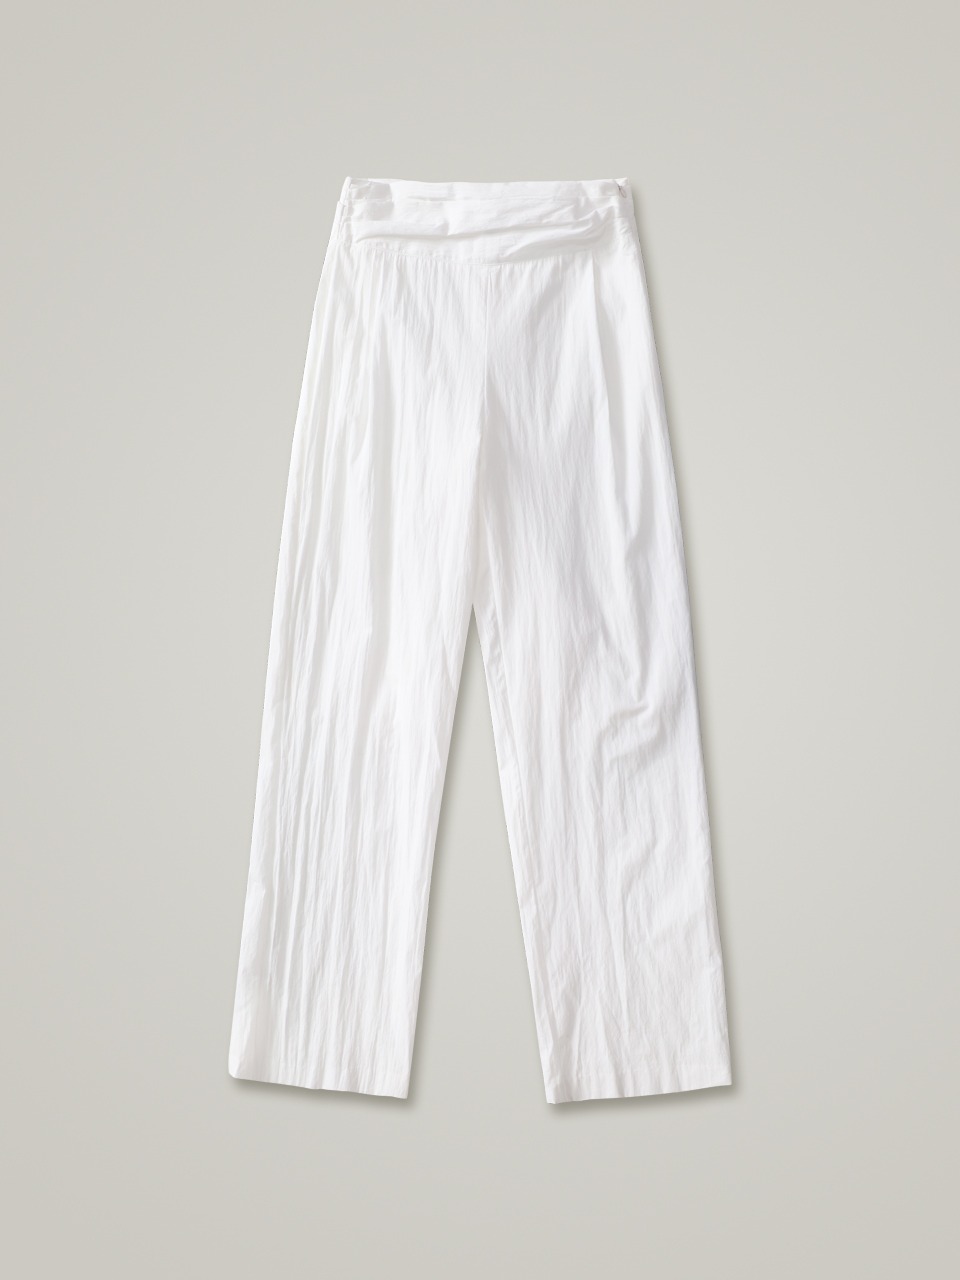 comos 867 waist shirring pants (white)